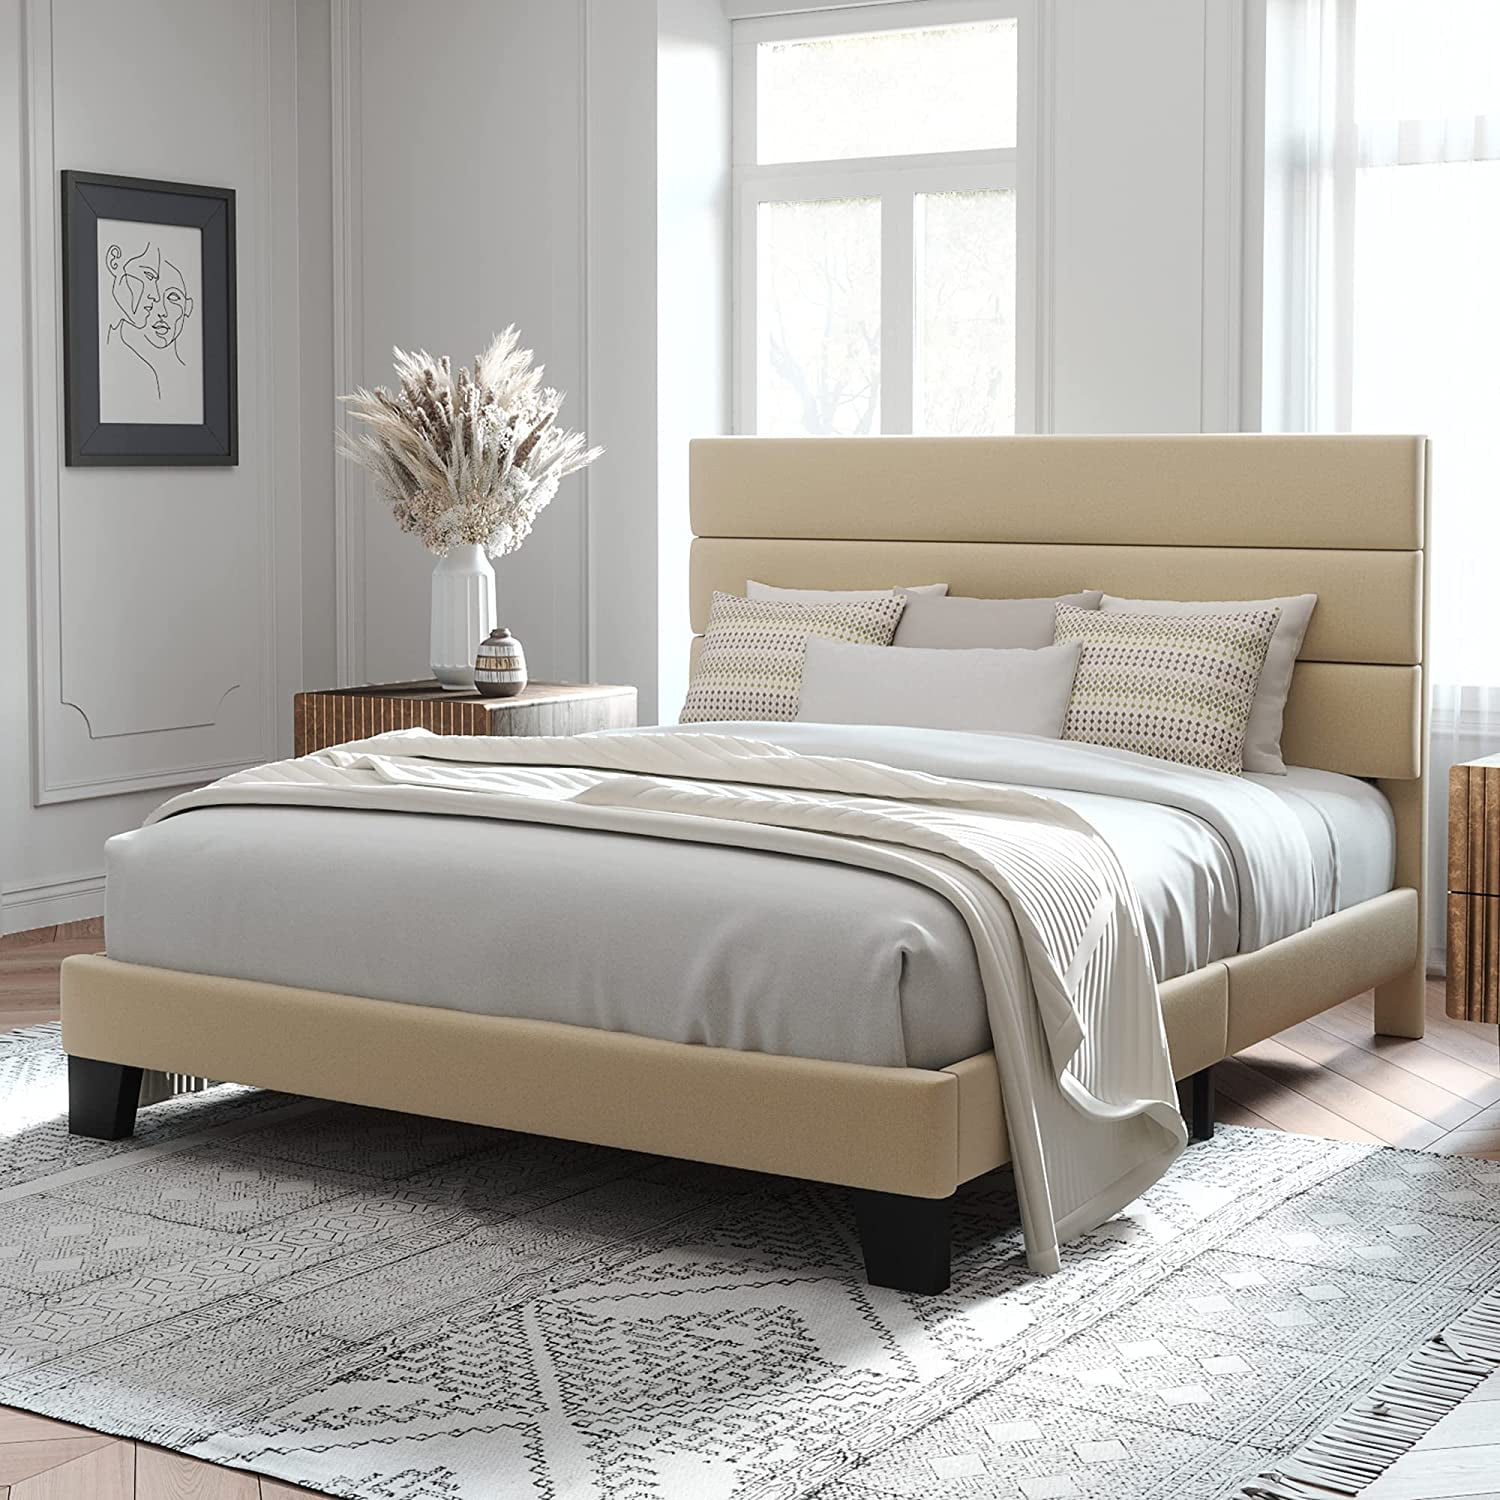 Allewie Queen Size Platform Bed Frame with Velvet Headboard/Fully Upholstered Mattress Foundation, No Box Spring Needed, Beige